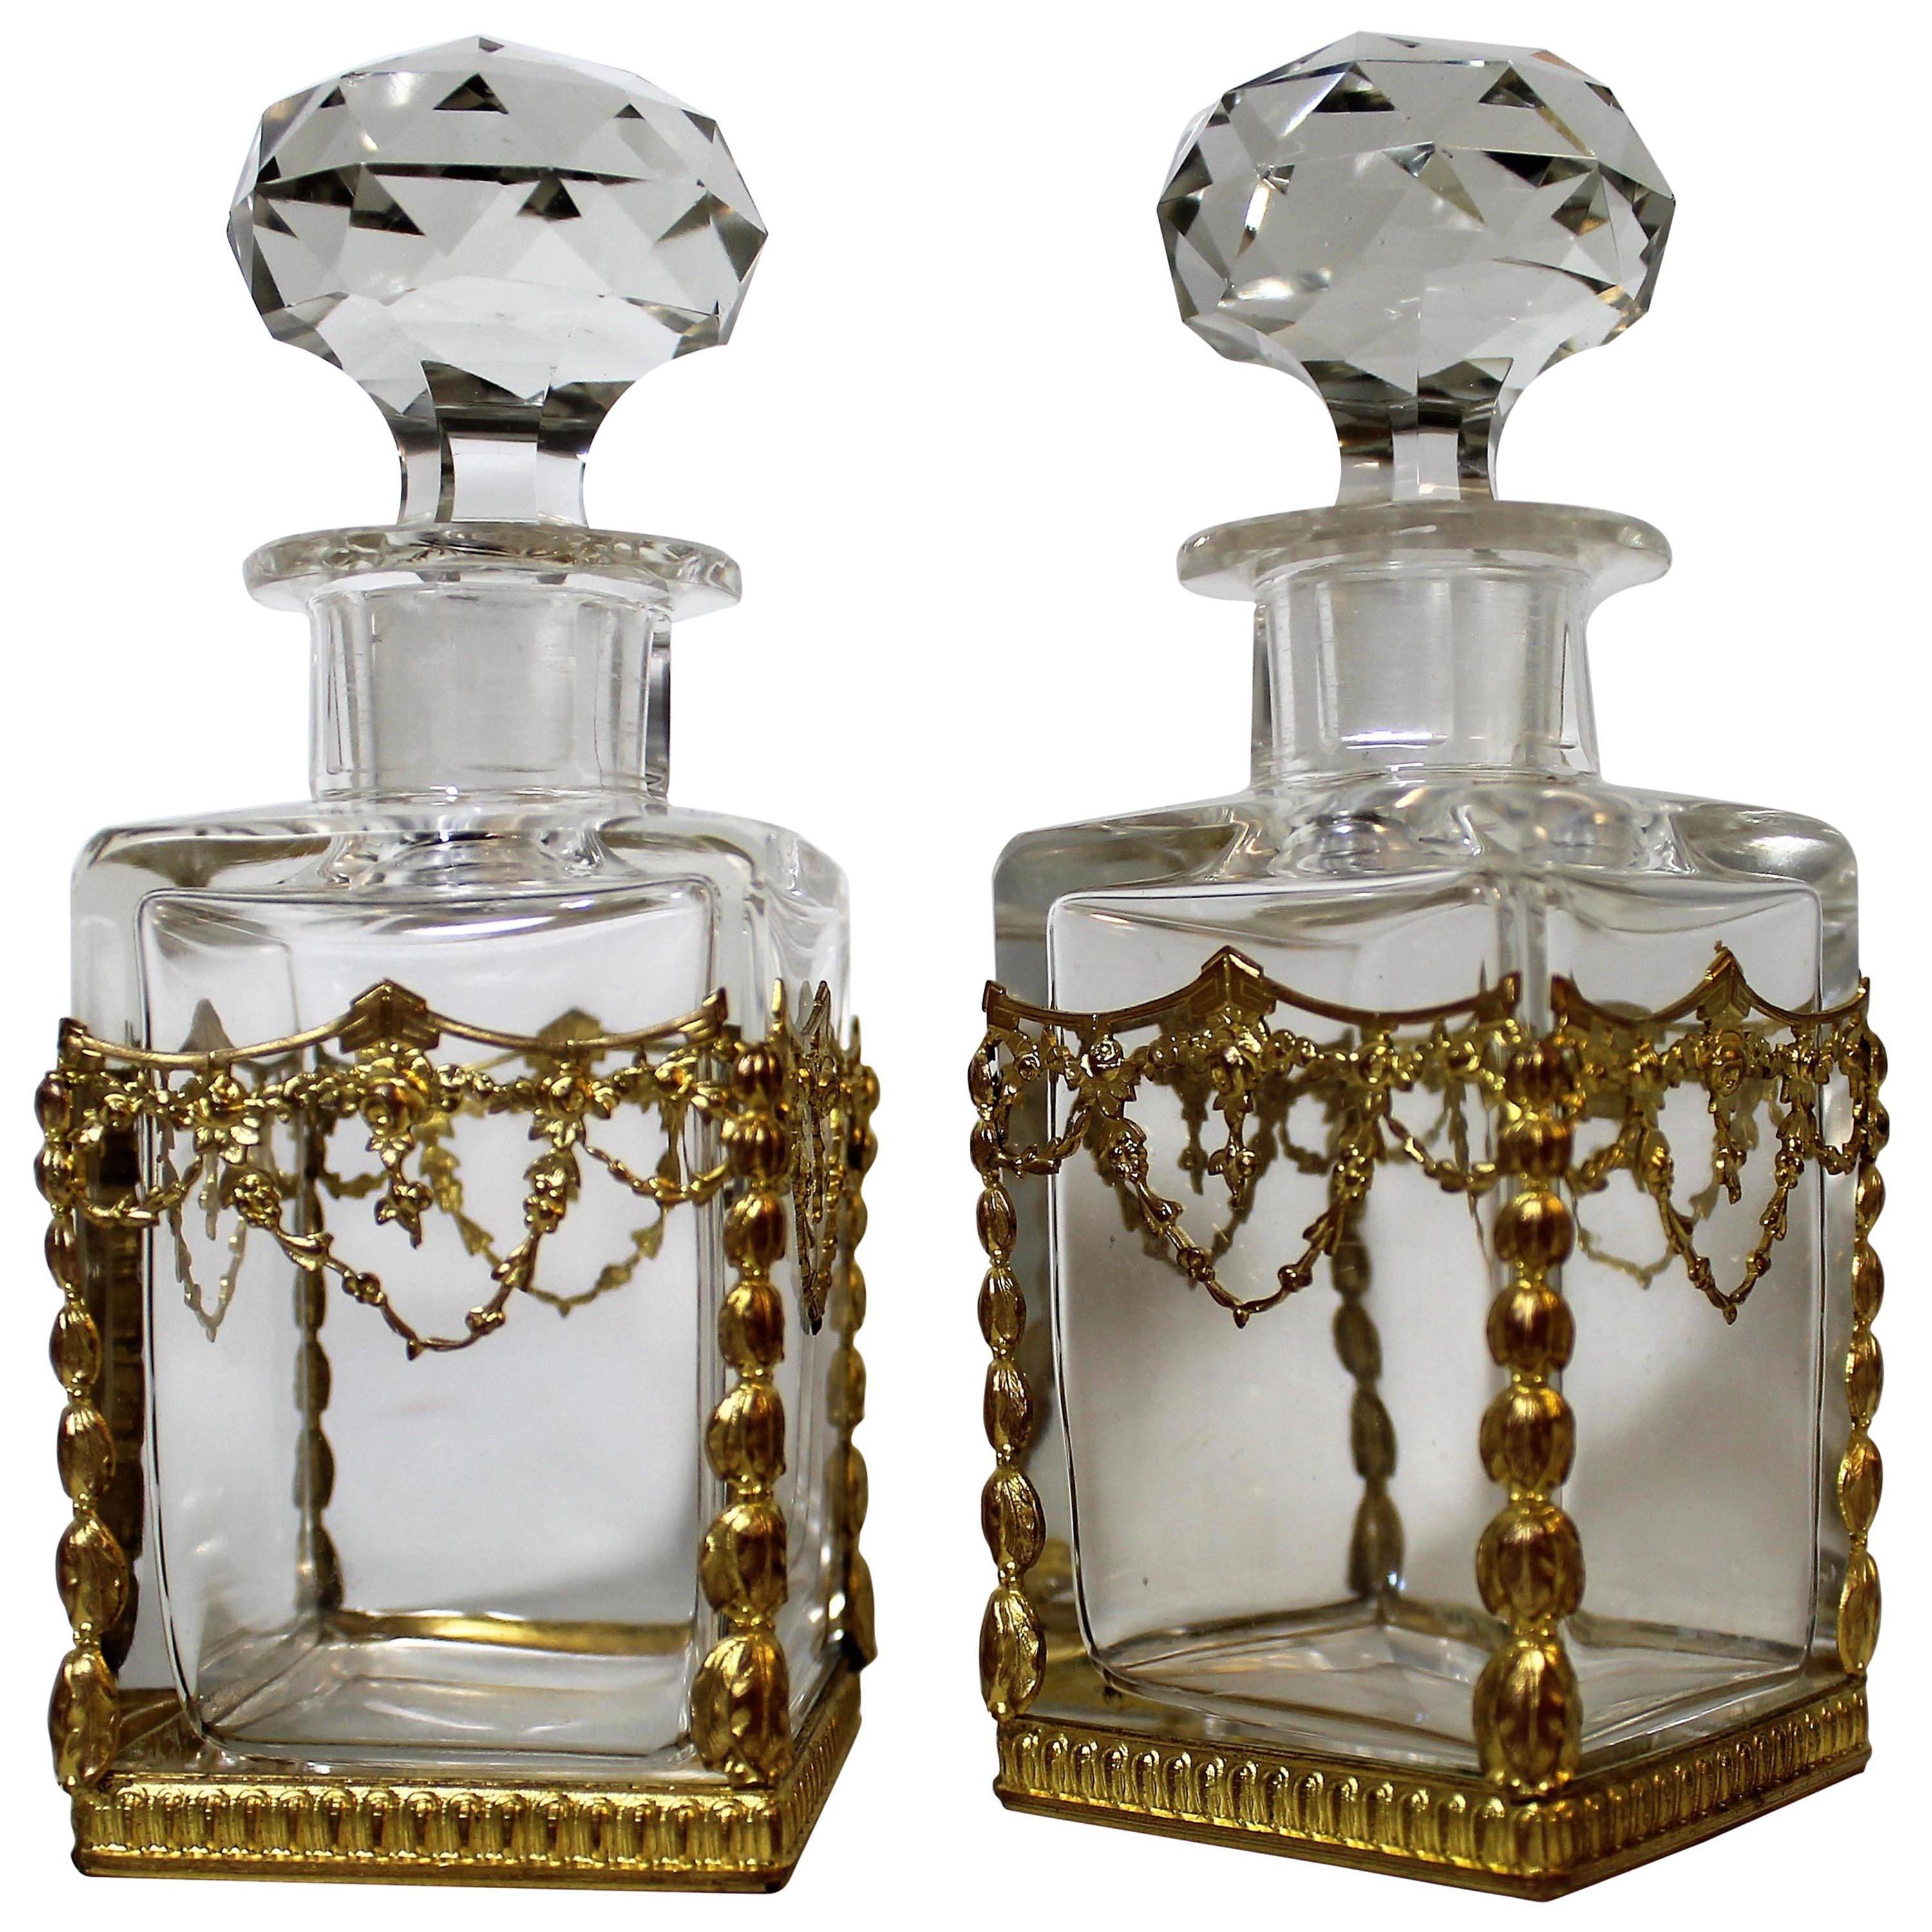 Pair of French Ormolu-Mounted Perfume Bottles